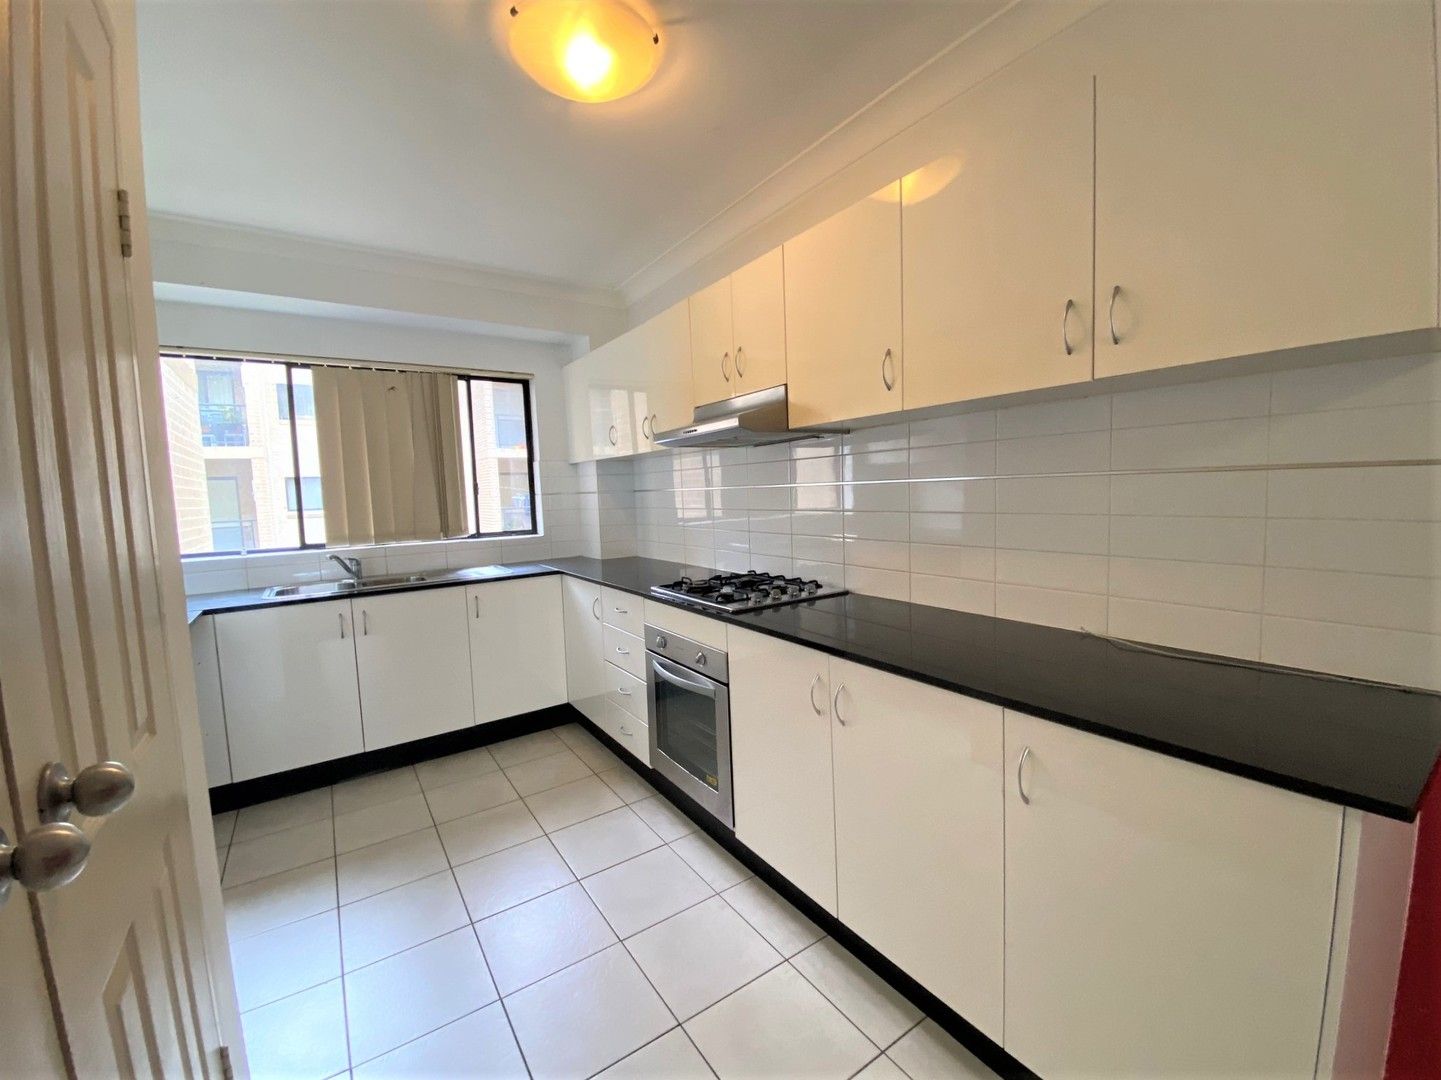 2 bedrooms Apartment / Unit / Flat in 53/1-5 Durham Street MOUNT DRUITT NSW, 2770